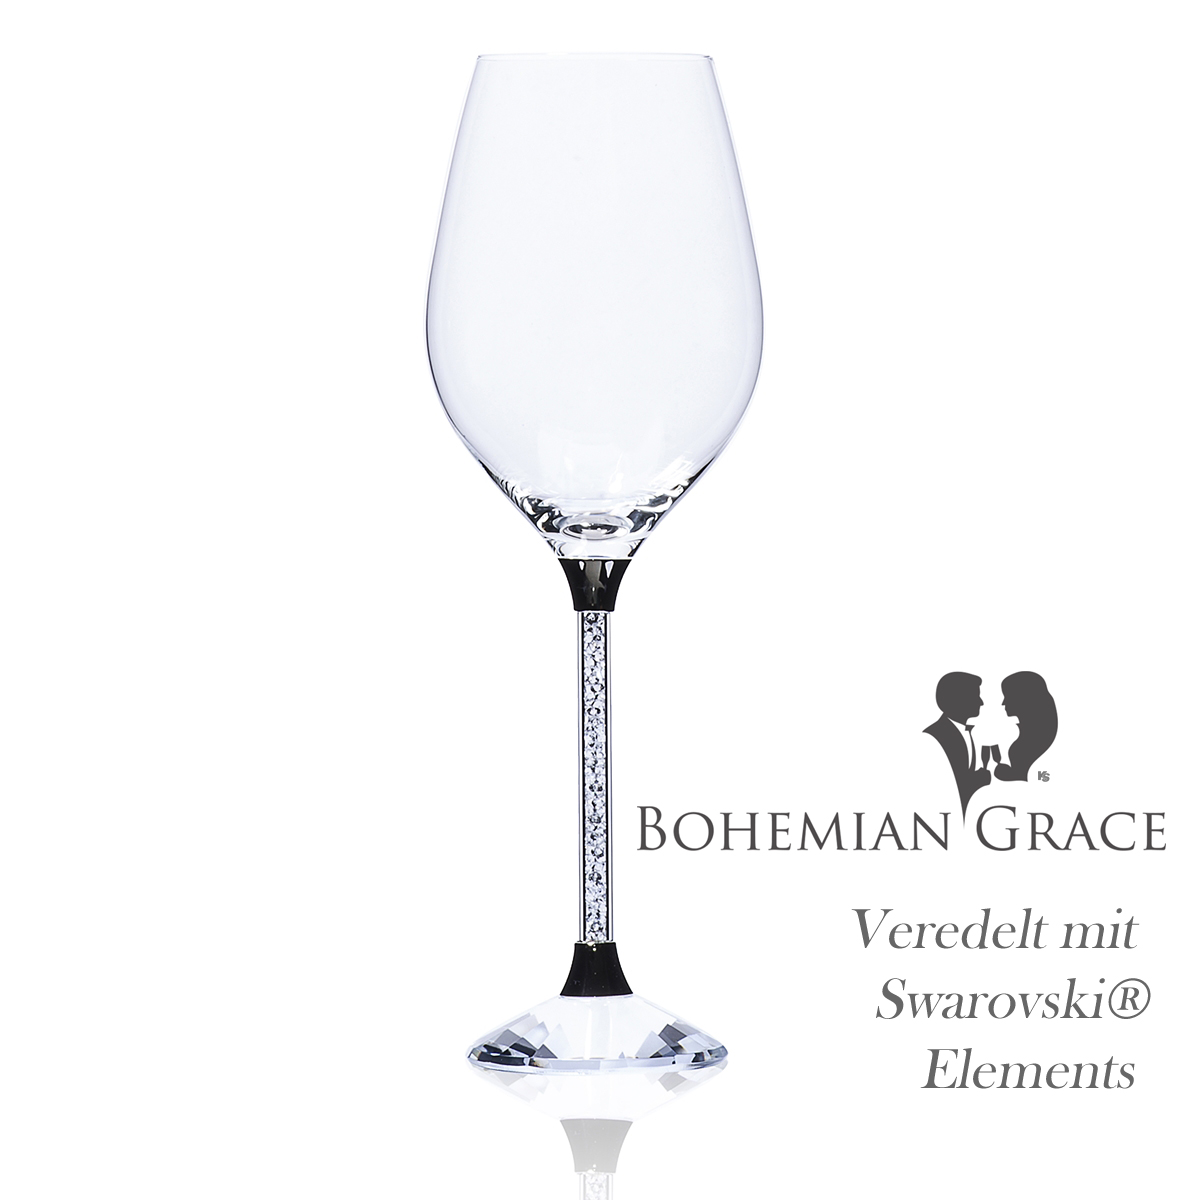 Weinglas 2Stk ANDROMEDA Bohemian Grace - Weissweingläser ANDROMEDA 2Stk, mit Swarovski Elements